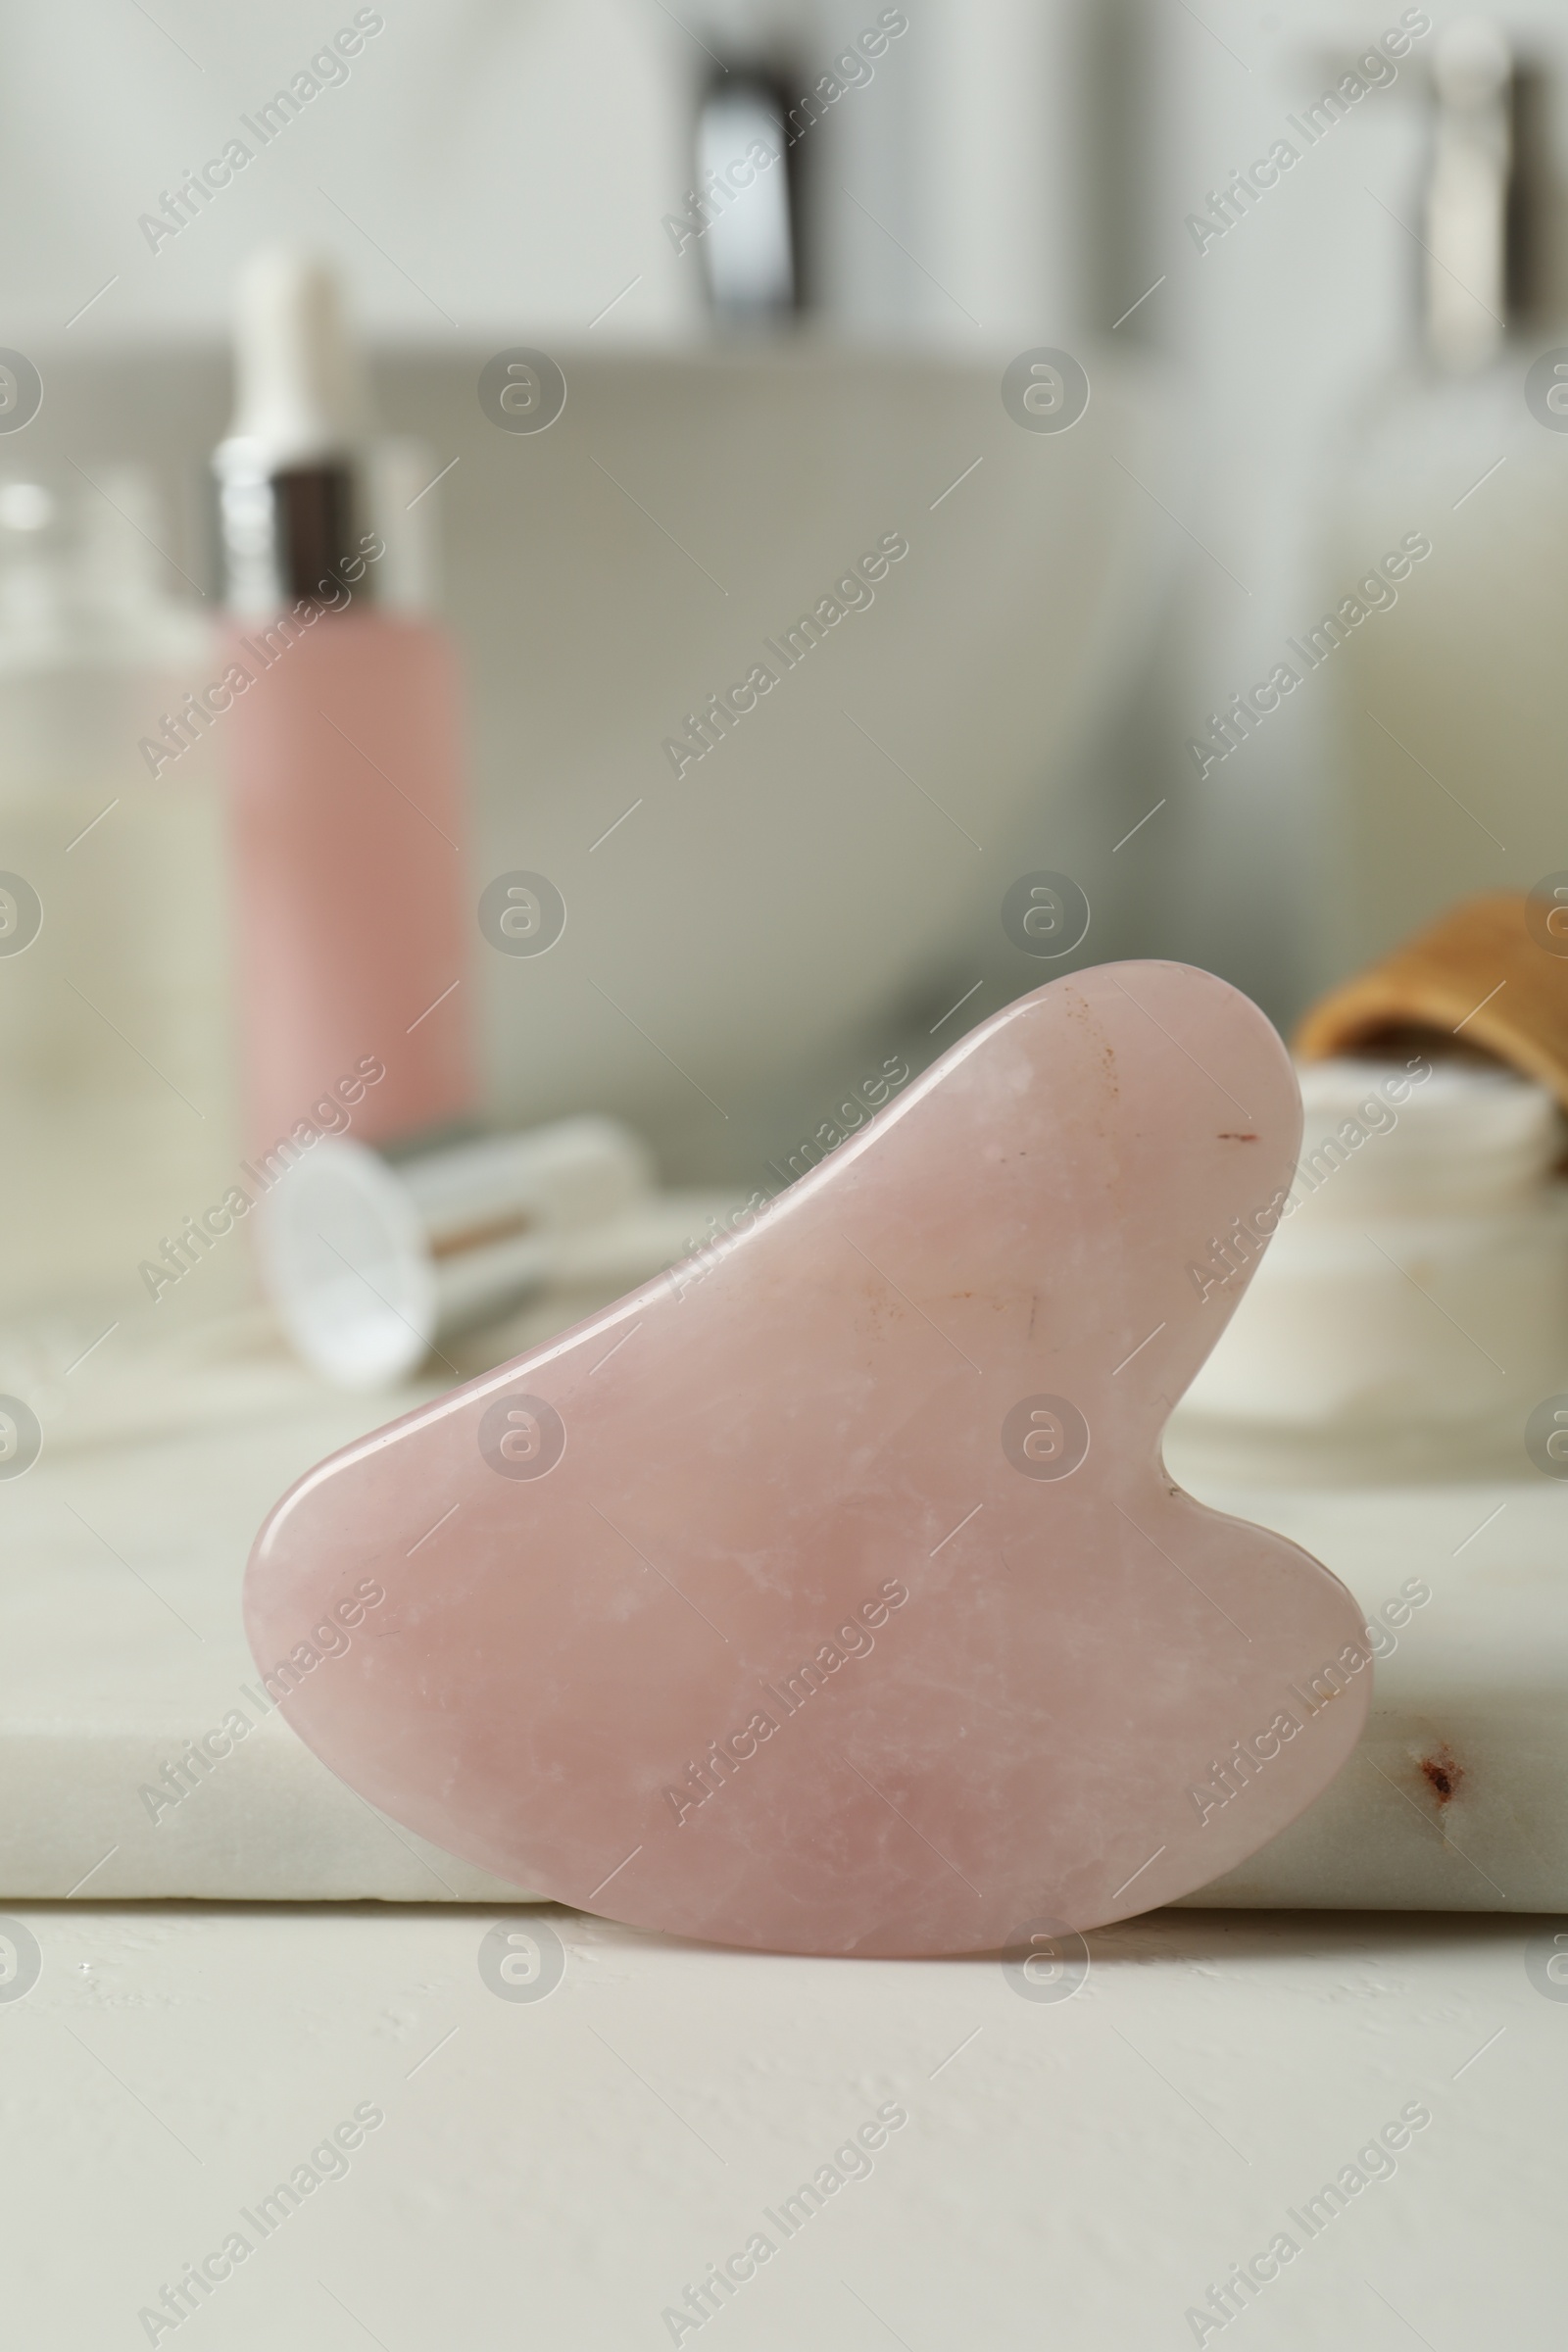 Photo of Rose quartz gua sha tool and toiletries on white countertop in bathroom, closeup